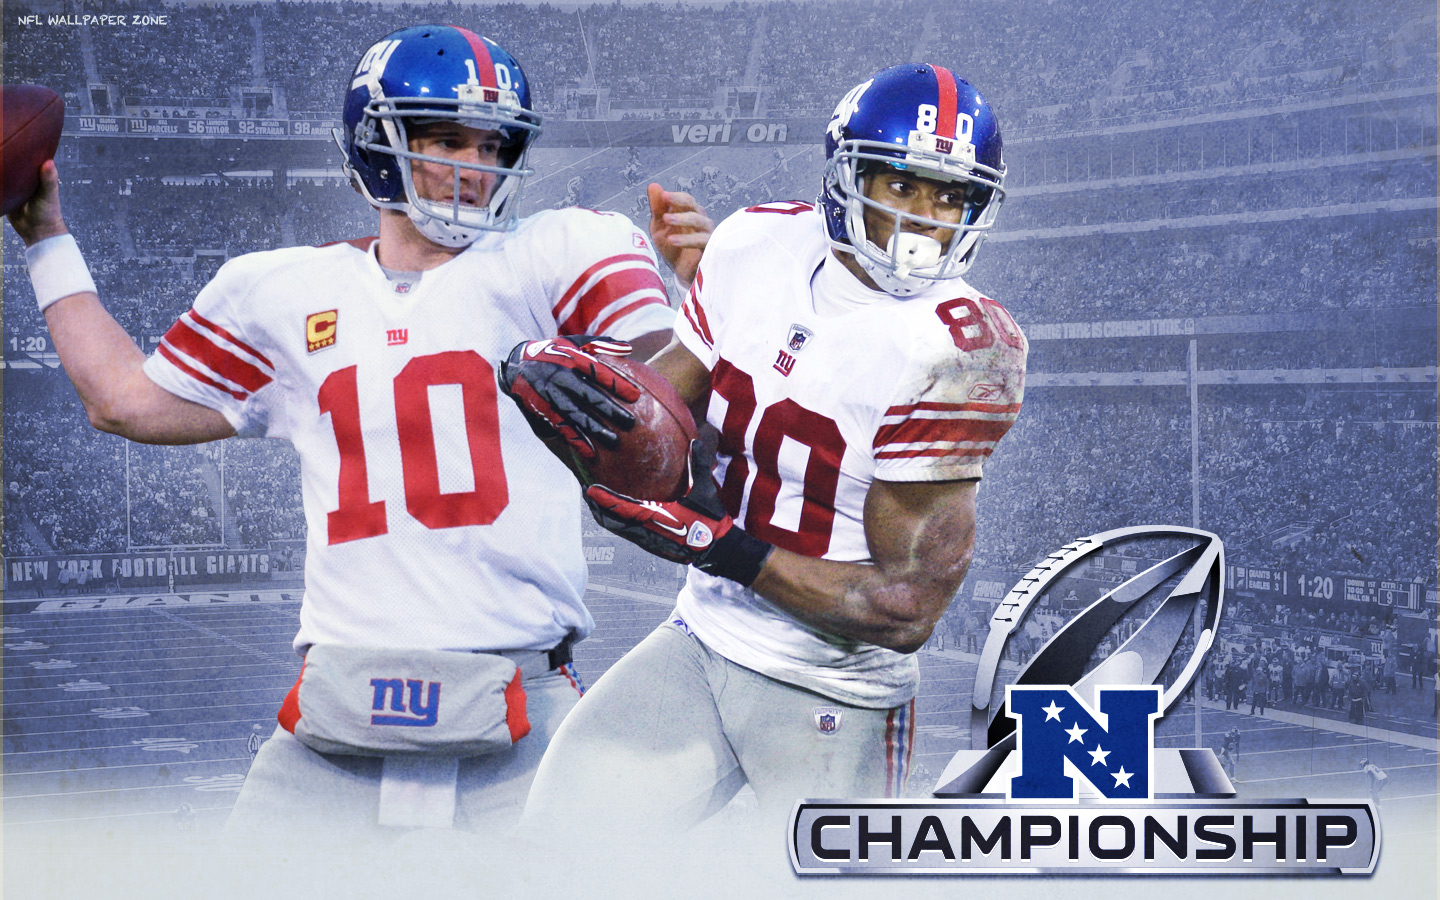 New York Giants NFC Championship Wallpaper 2012